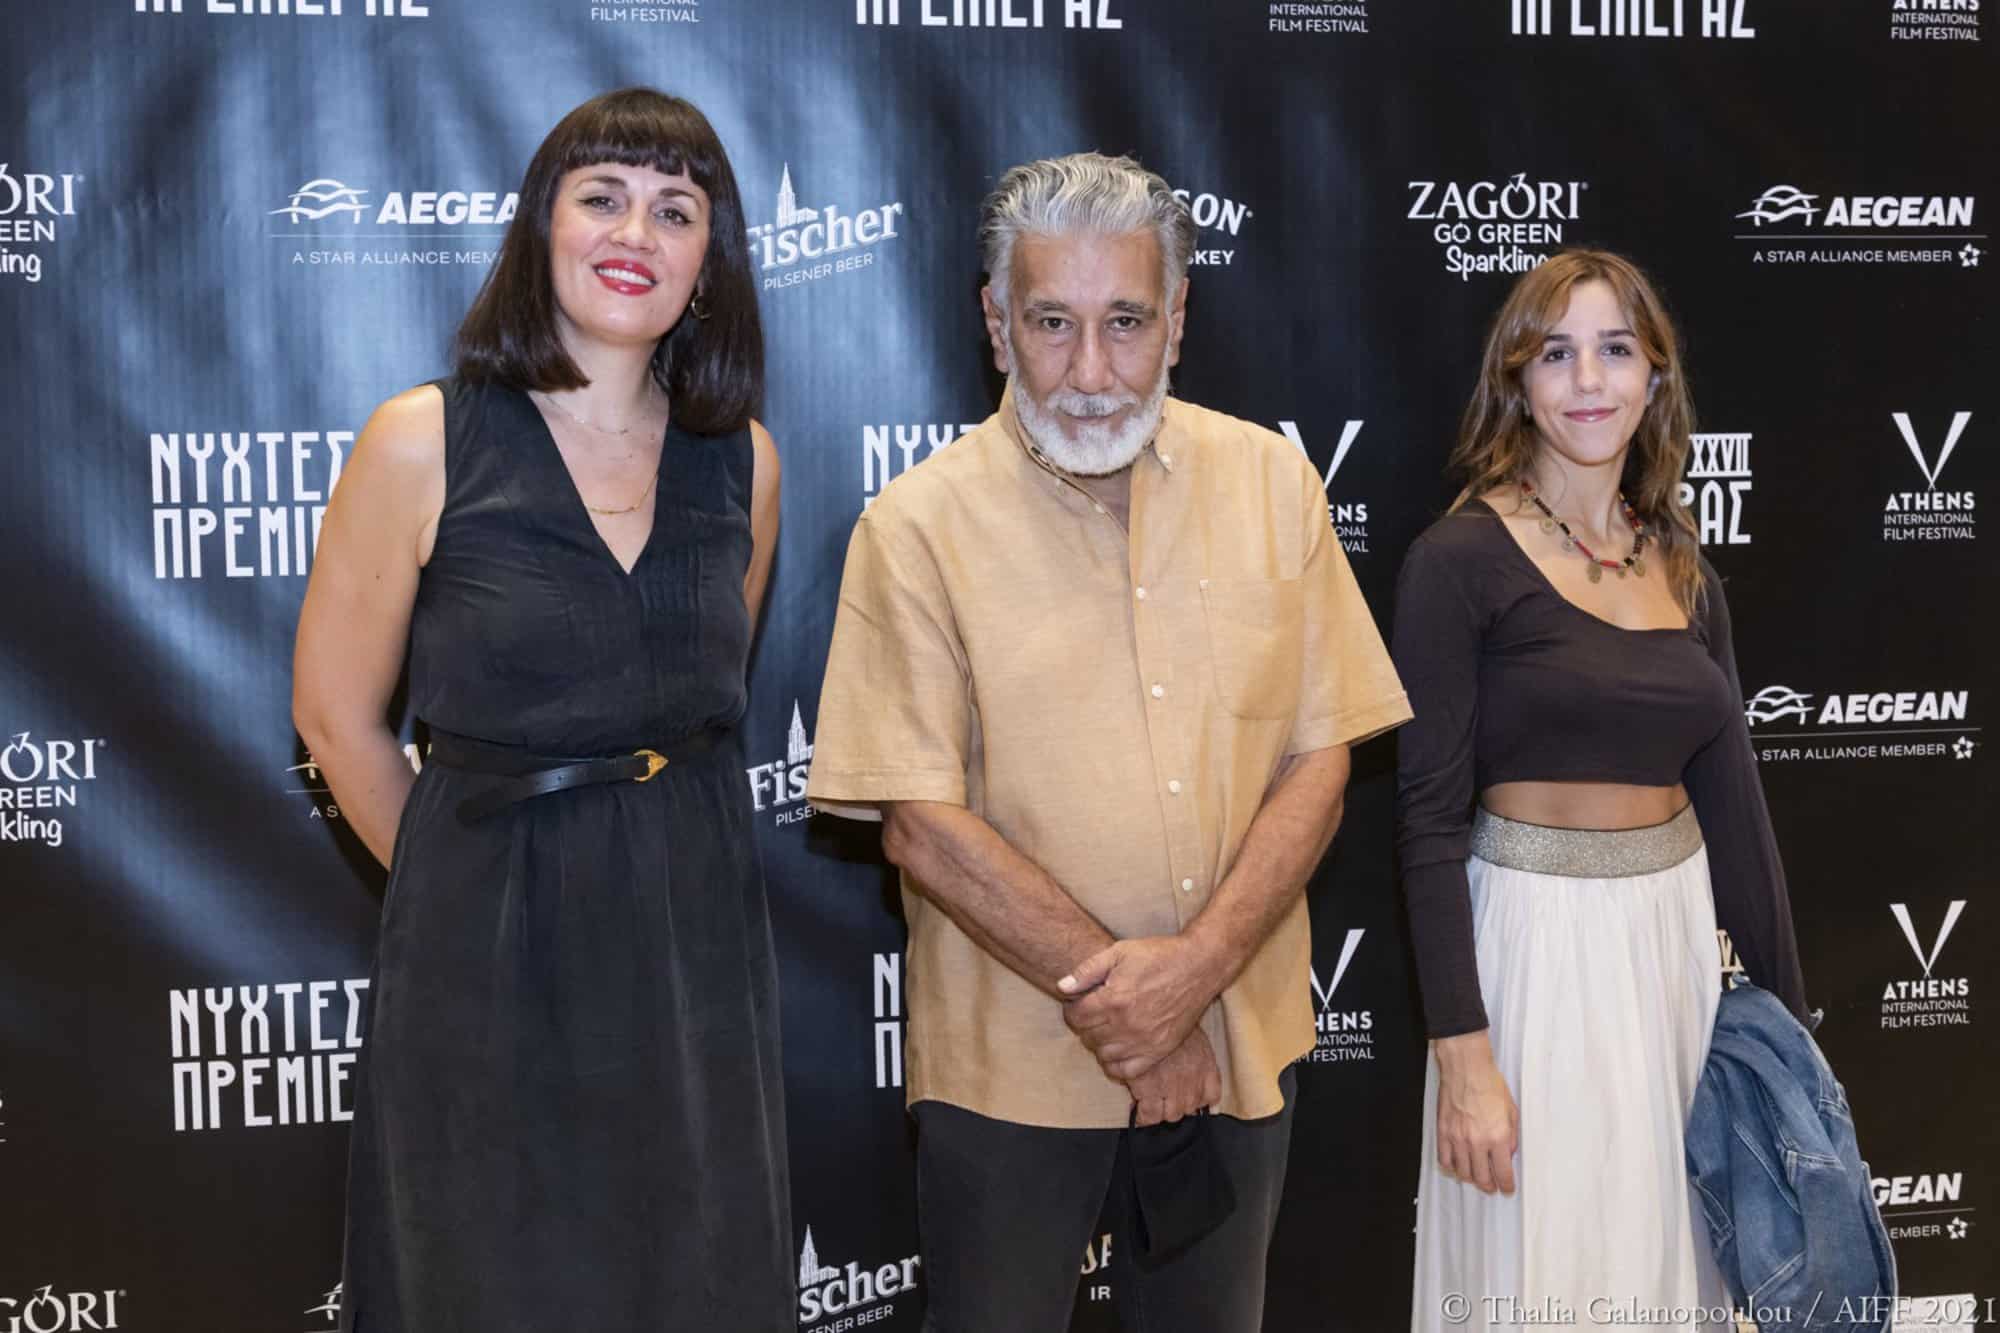 GREECE: 27th Athens International Film Festival kicks off new year of great cinema 9